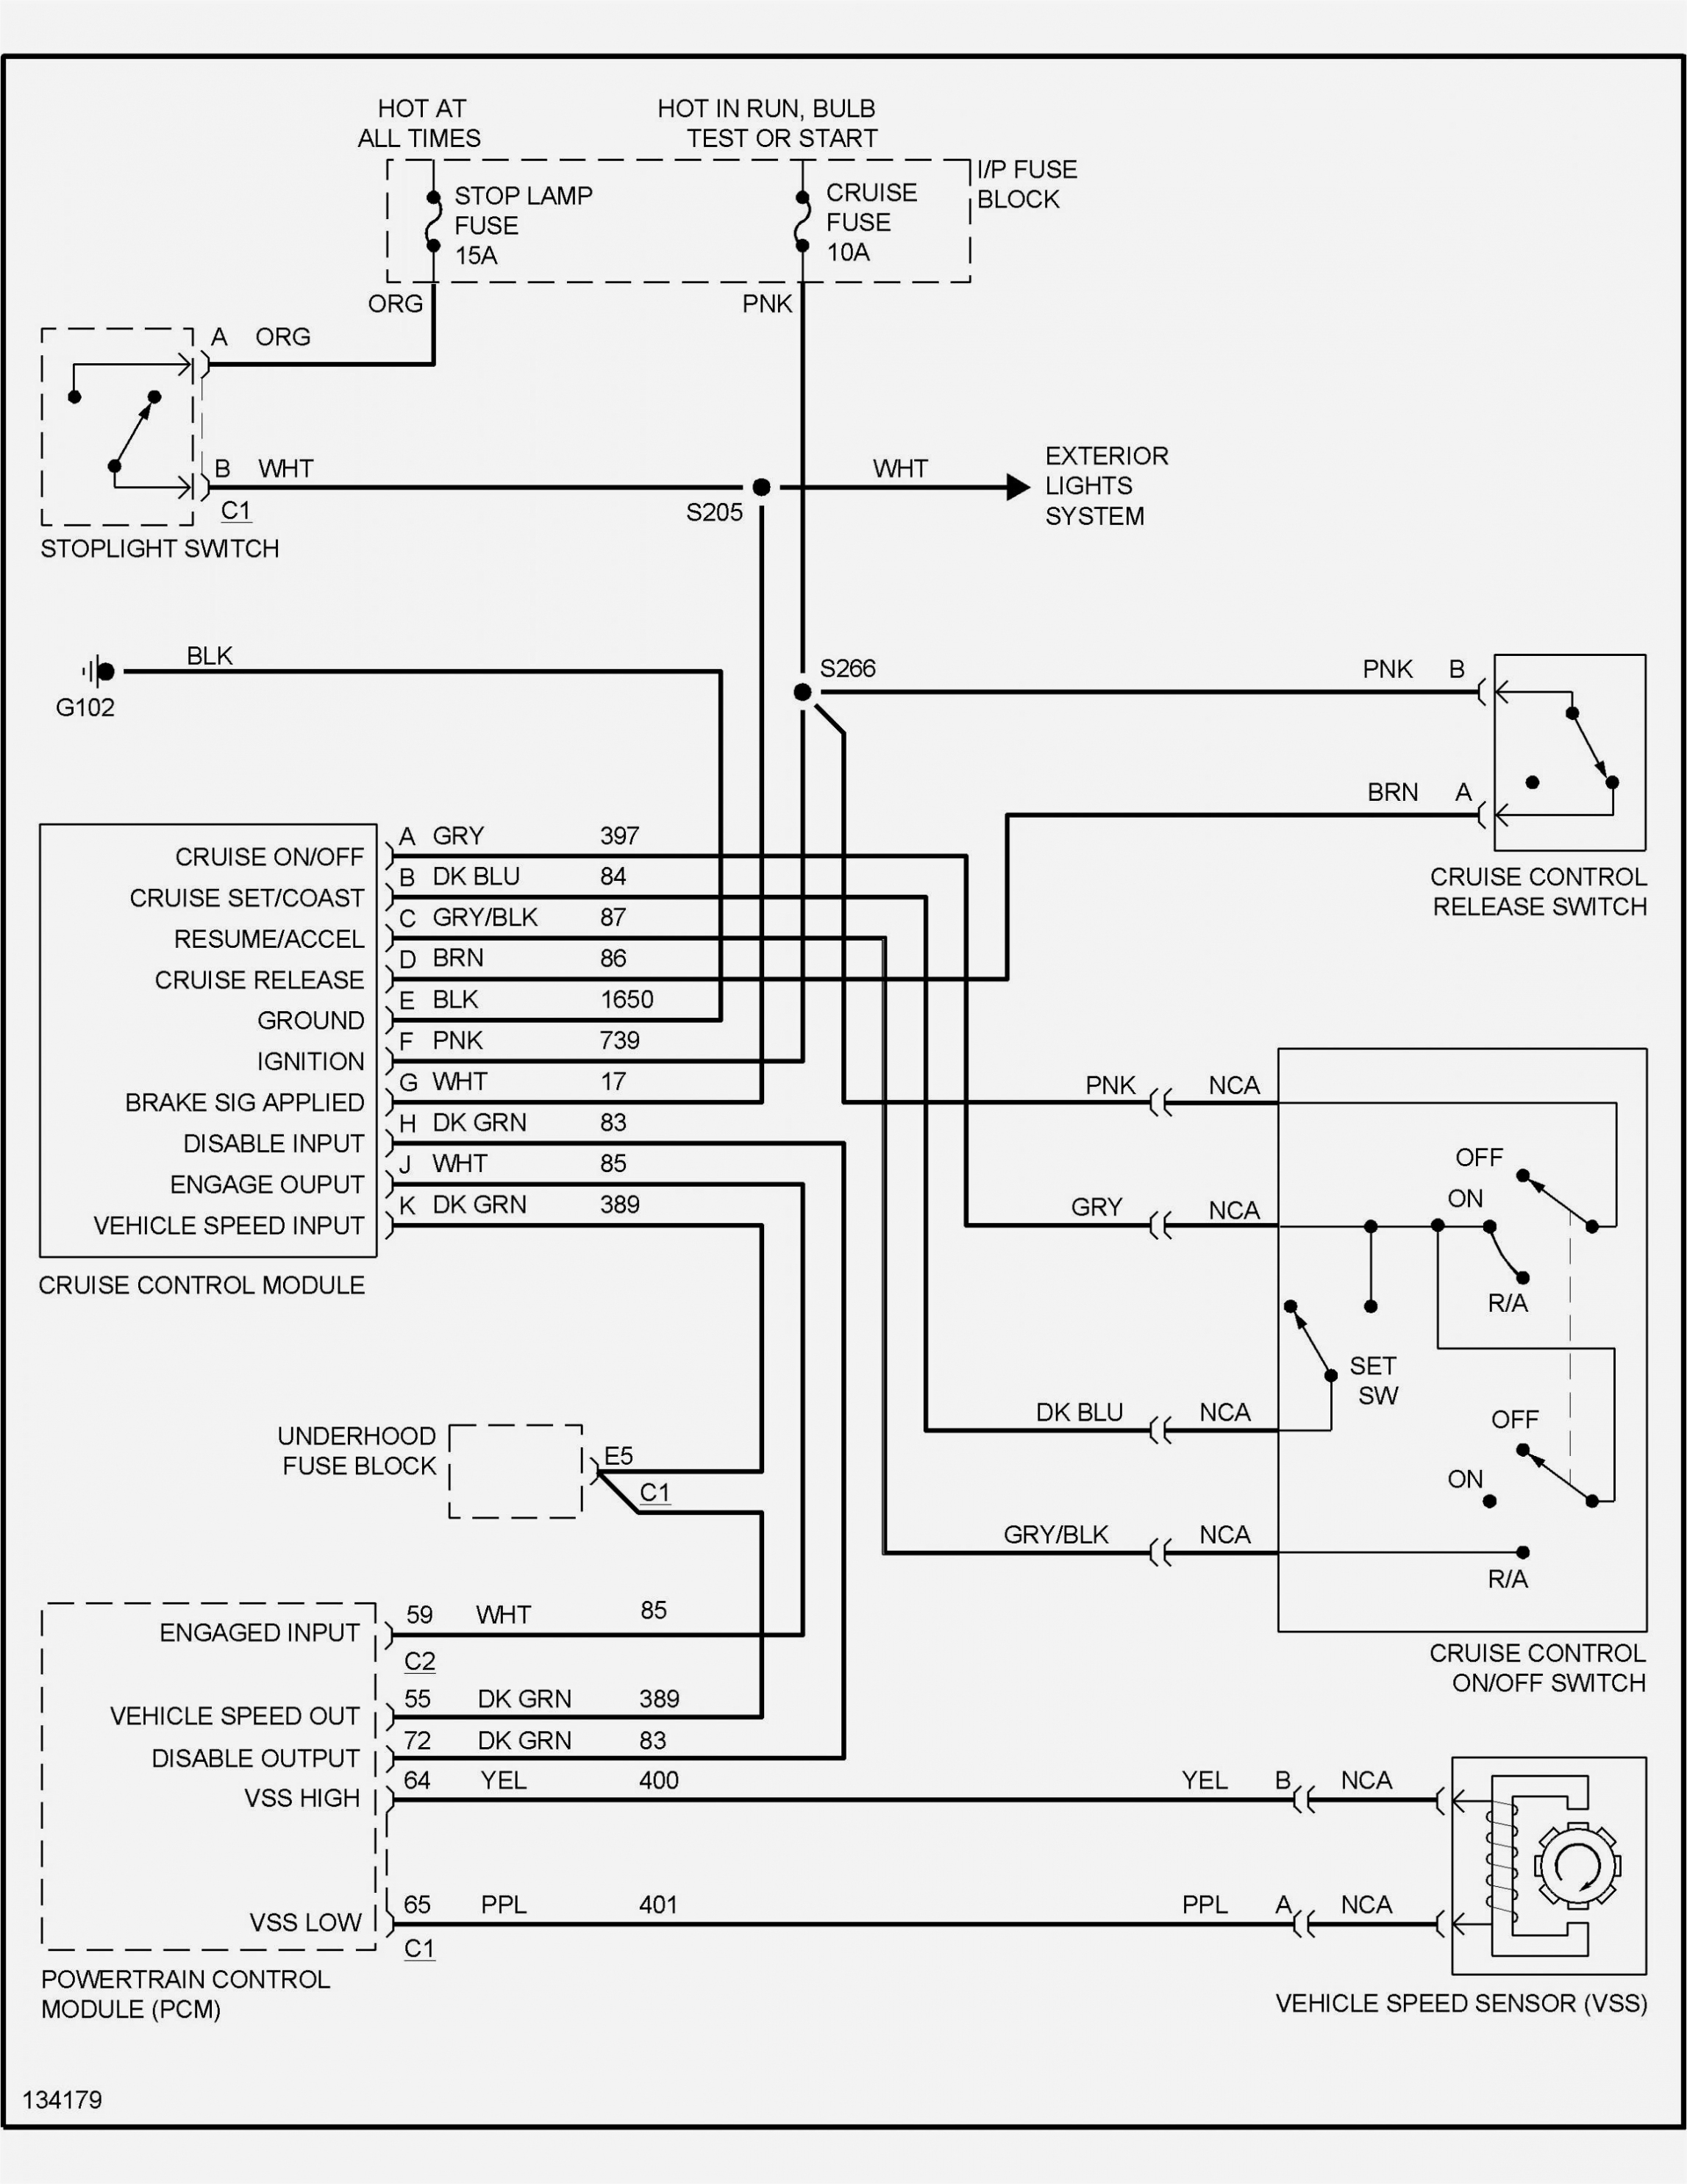 Sony Cdx Gt34W Wiring Schematics For Model | Wiring Diagram - Sony Explod Wiring Diagram